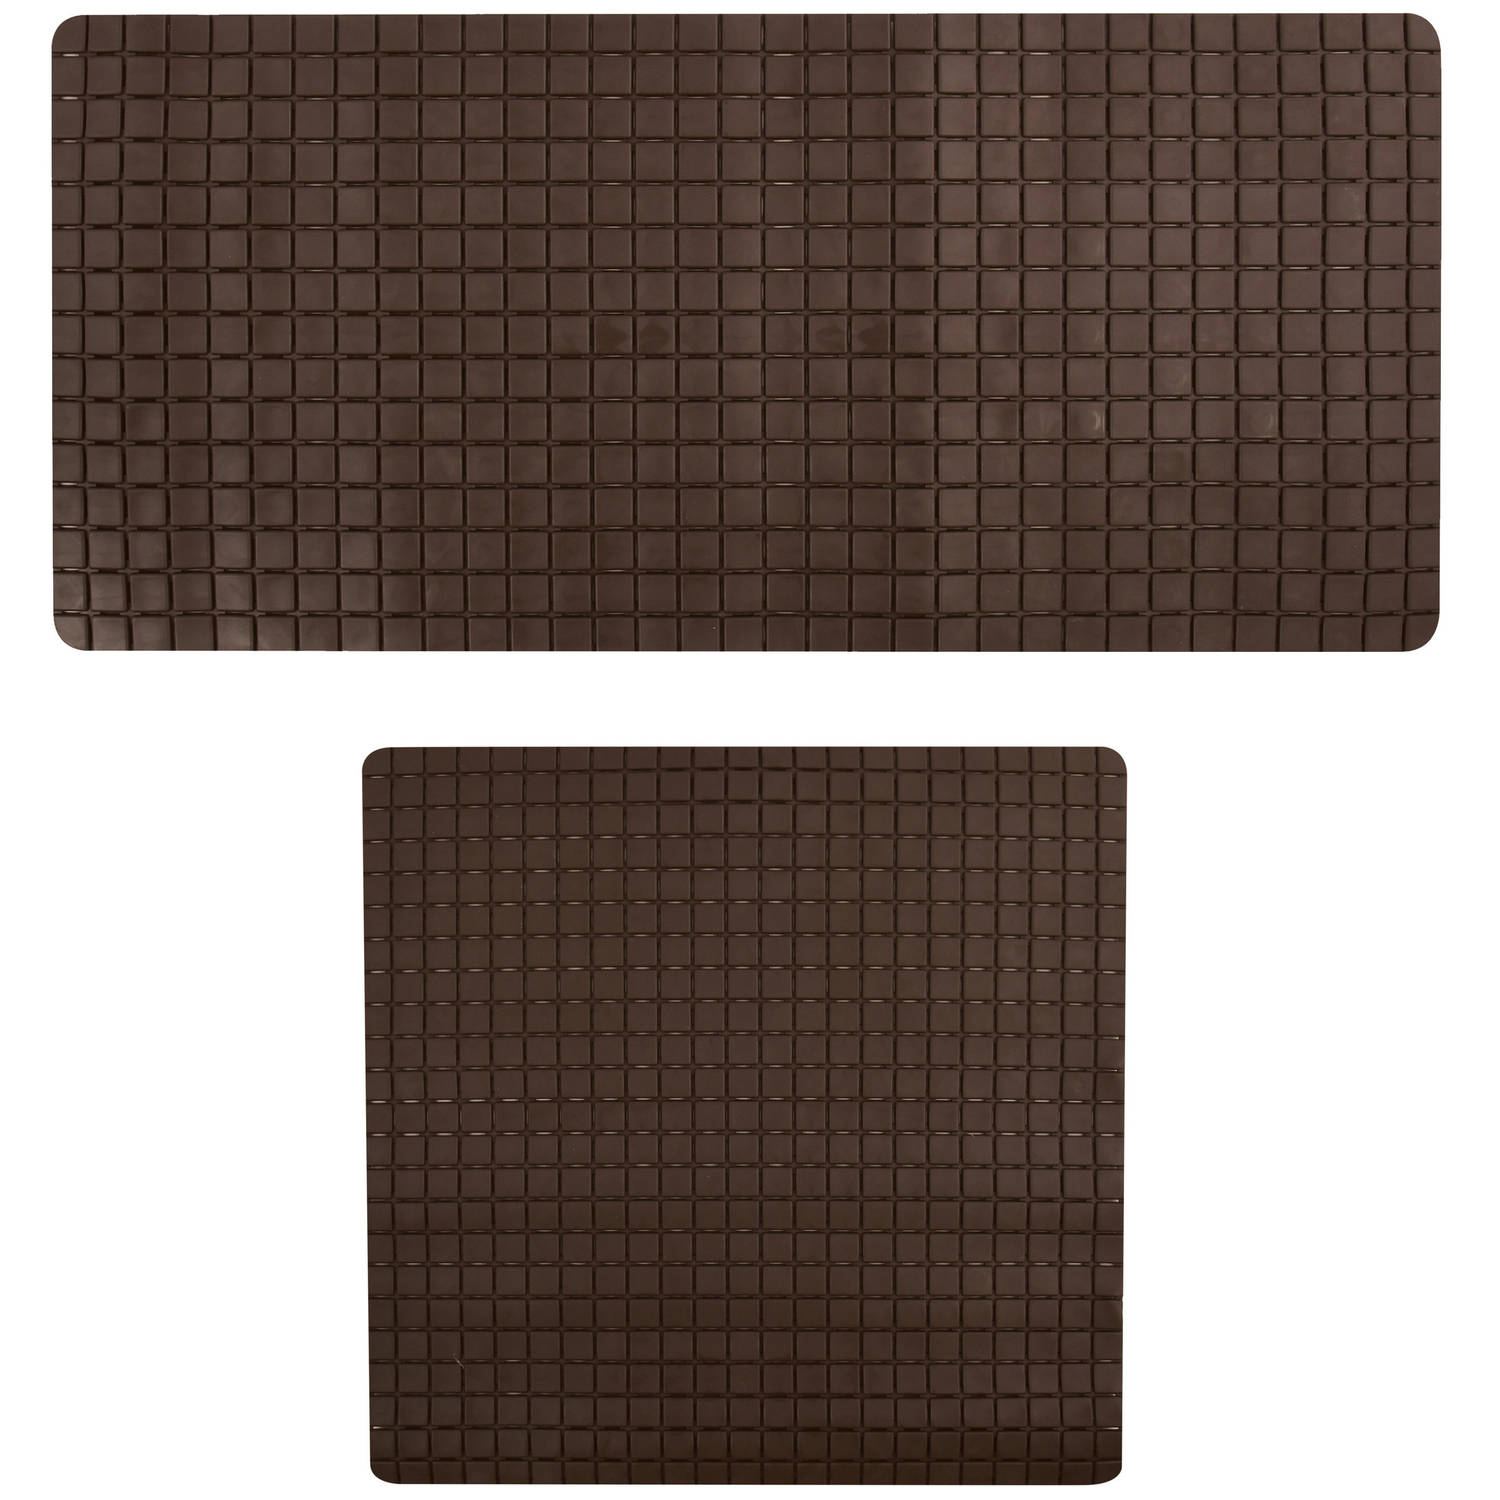 MSV Douche-bad anti-slip matten set badkamer rubber 2x stuks bruin 2 formaten Badmatjes